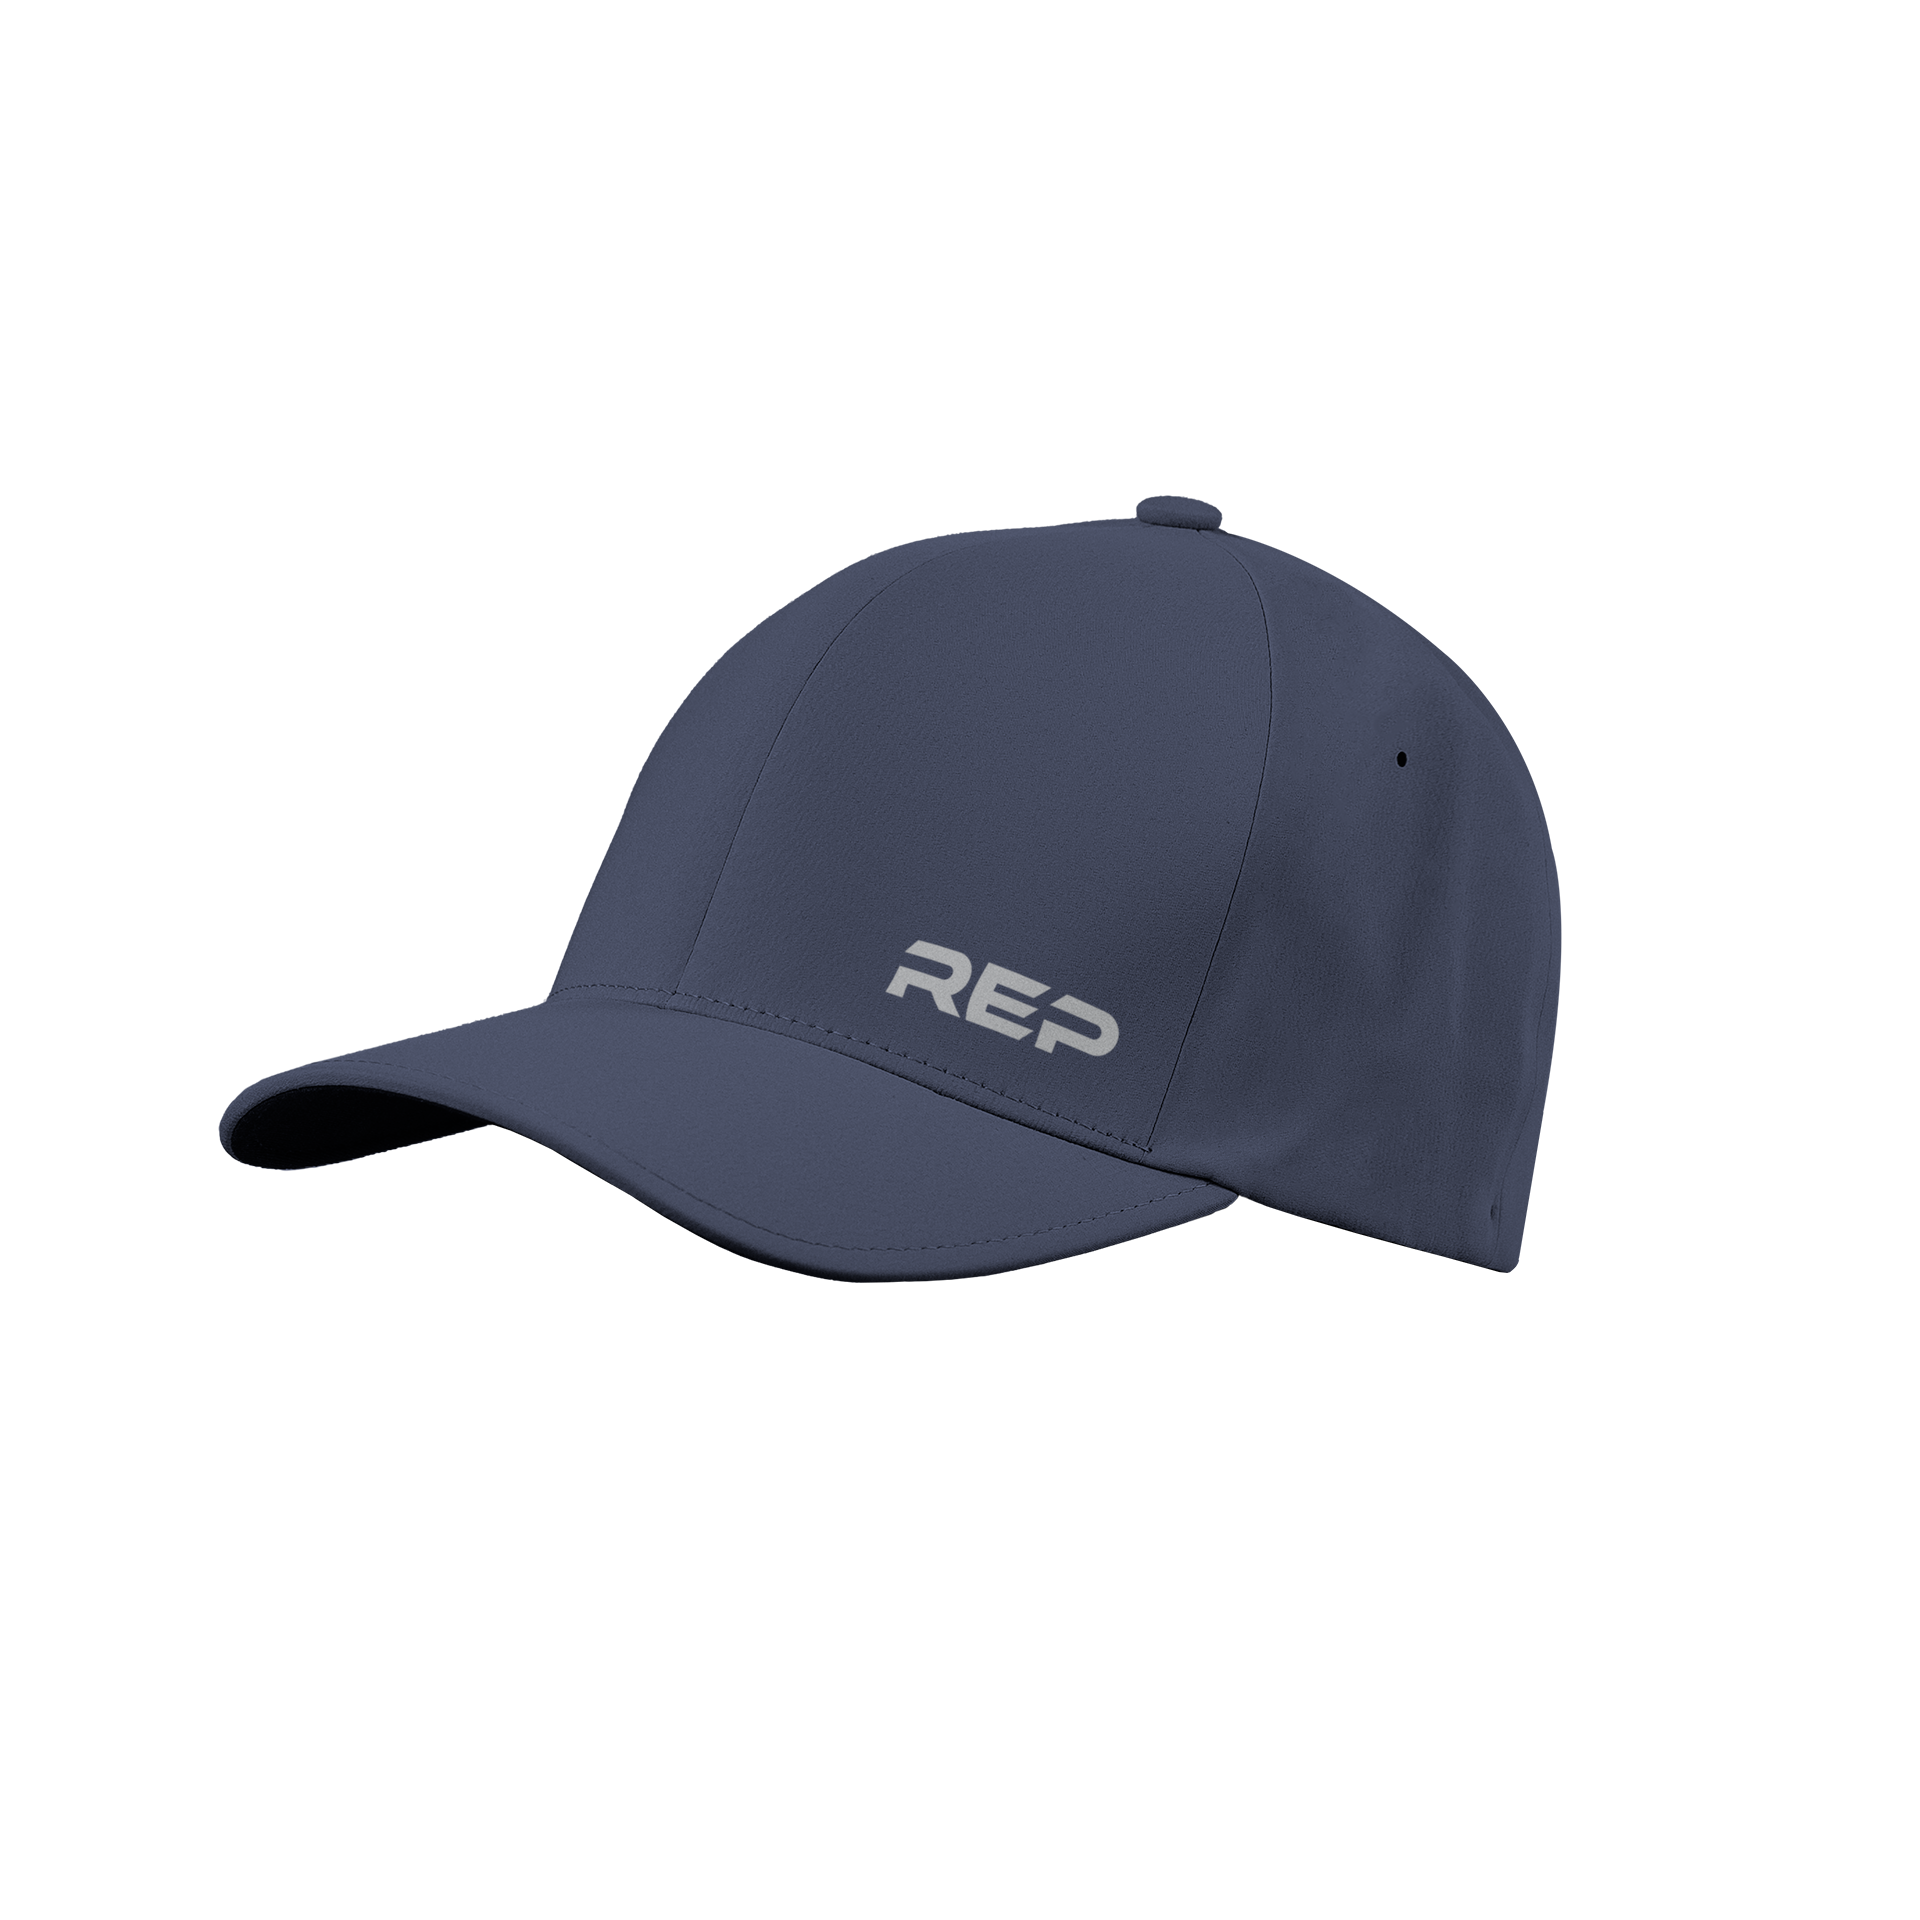 REP Performance Cap - Navy/Silver / S/M (6 3/4